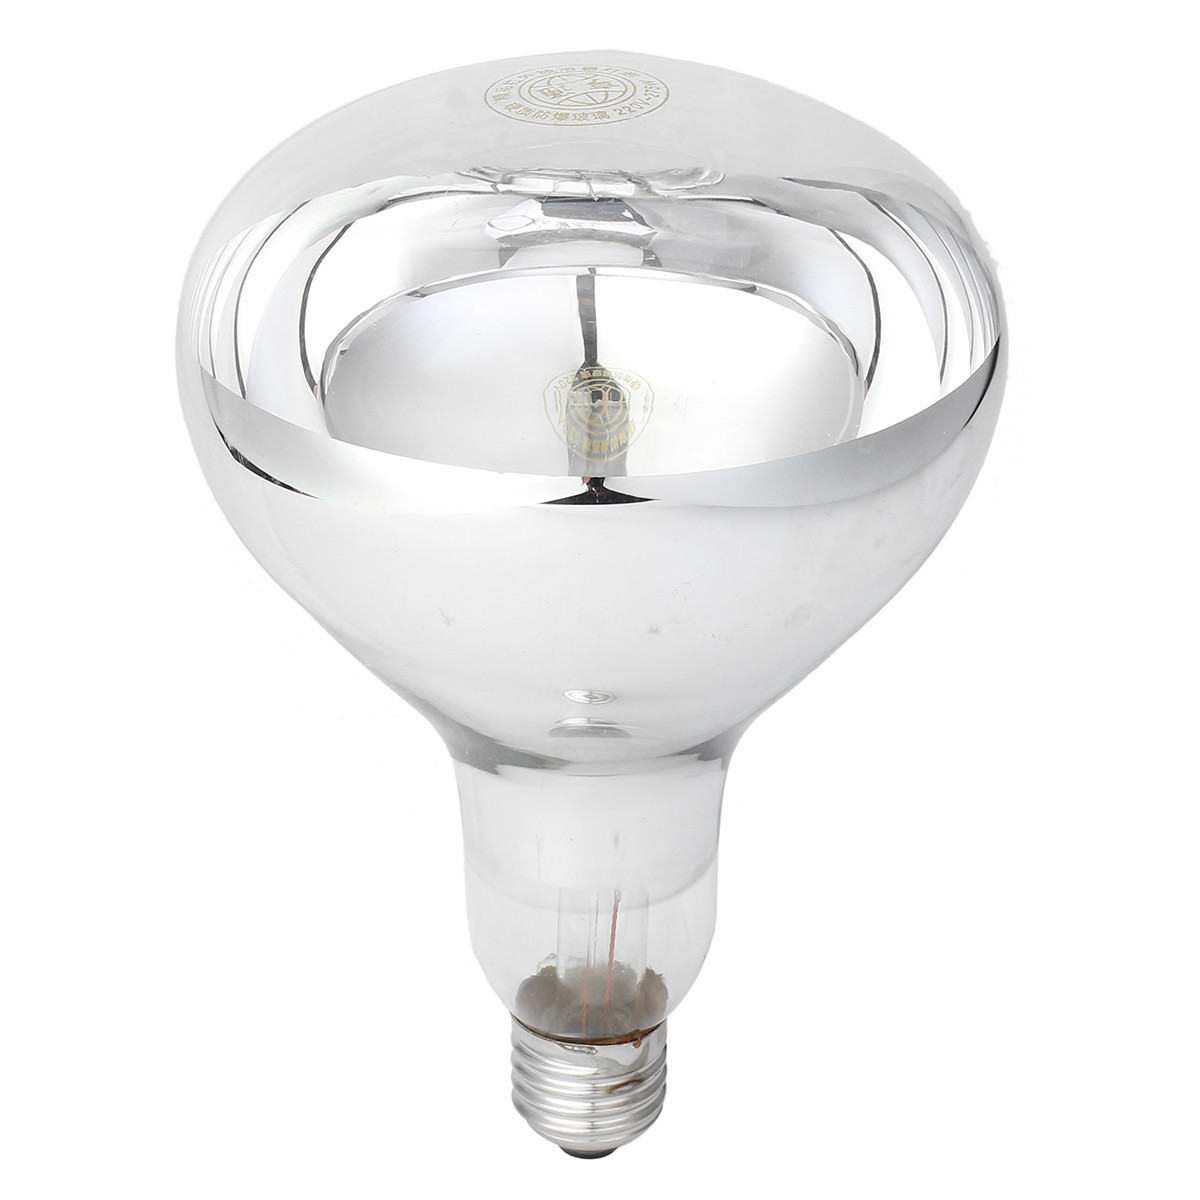 Heating Light Bulbs For Bathroom
 275W Infrared Heat Light E27 Bulb For Ceiling Exhaust Fan